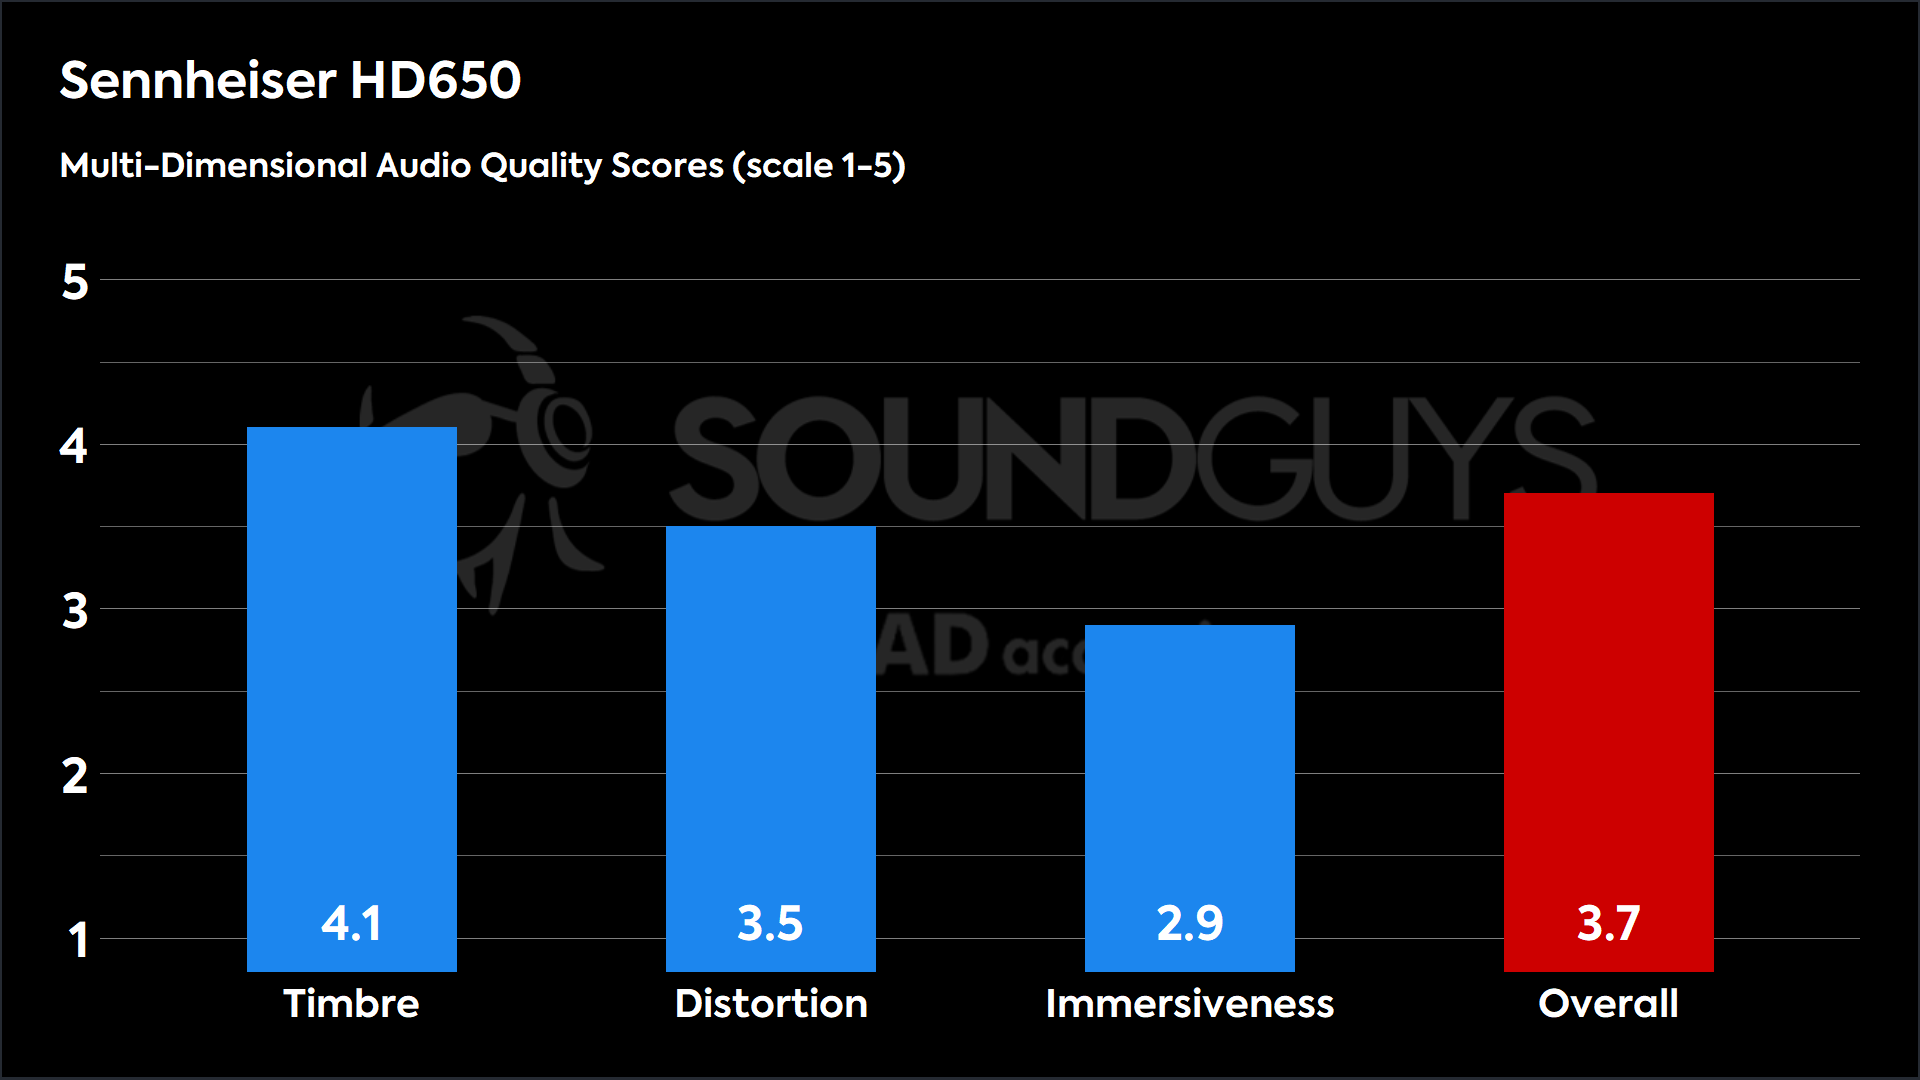 A bar chart showing the Sennheiser HD 650 MDAQS results